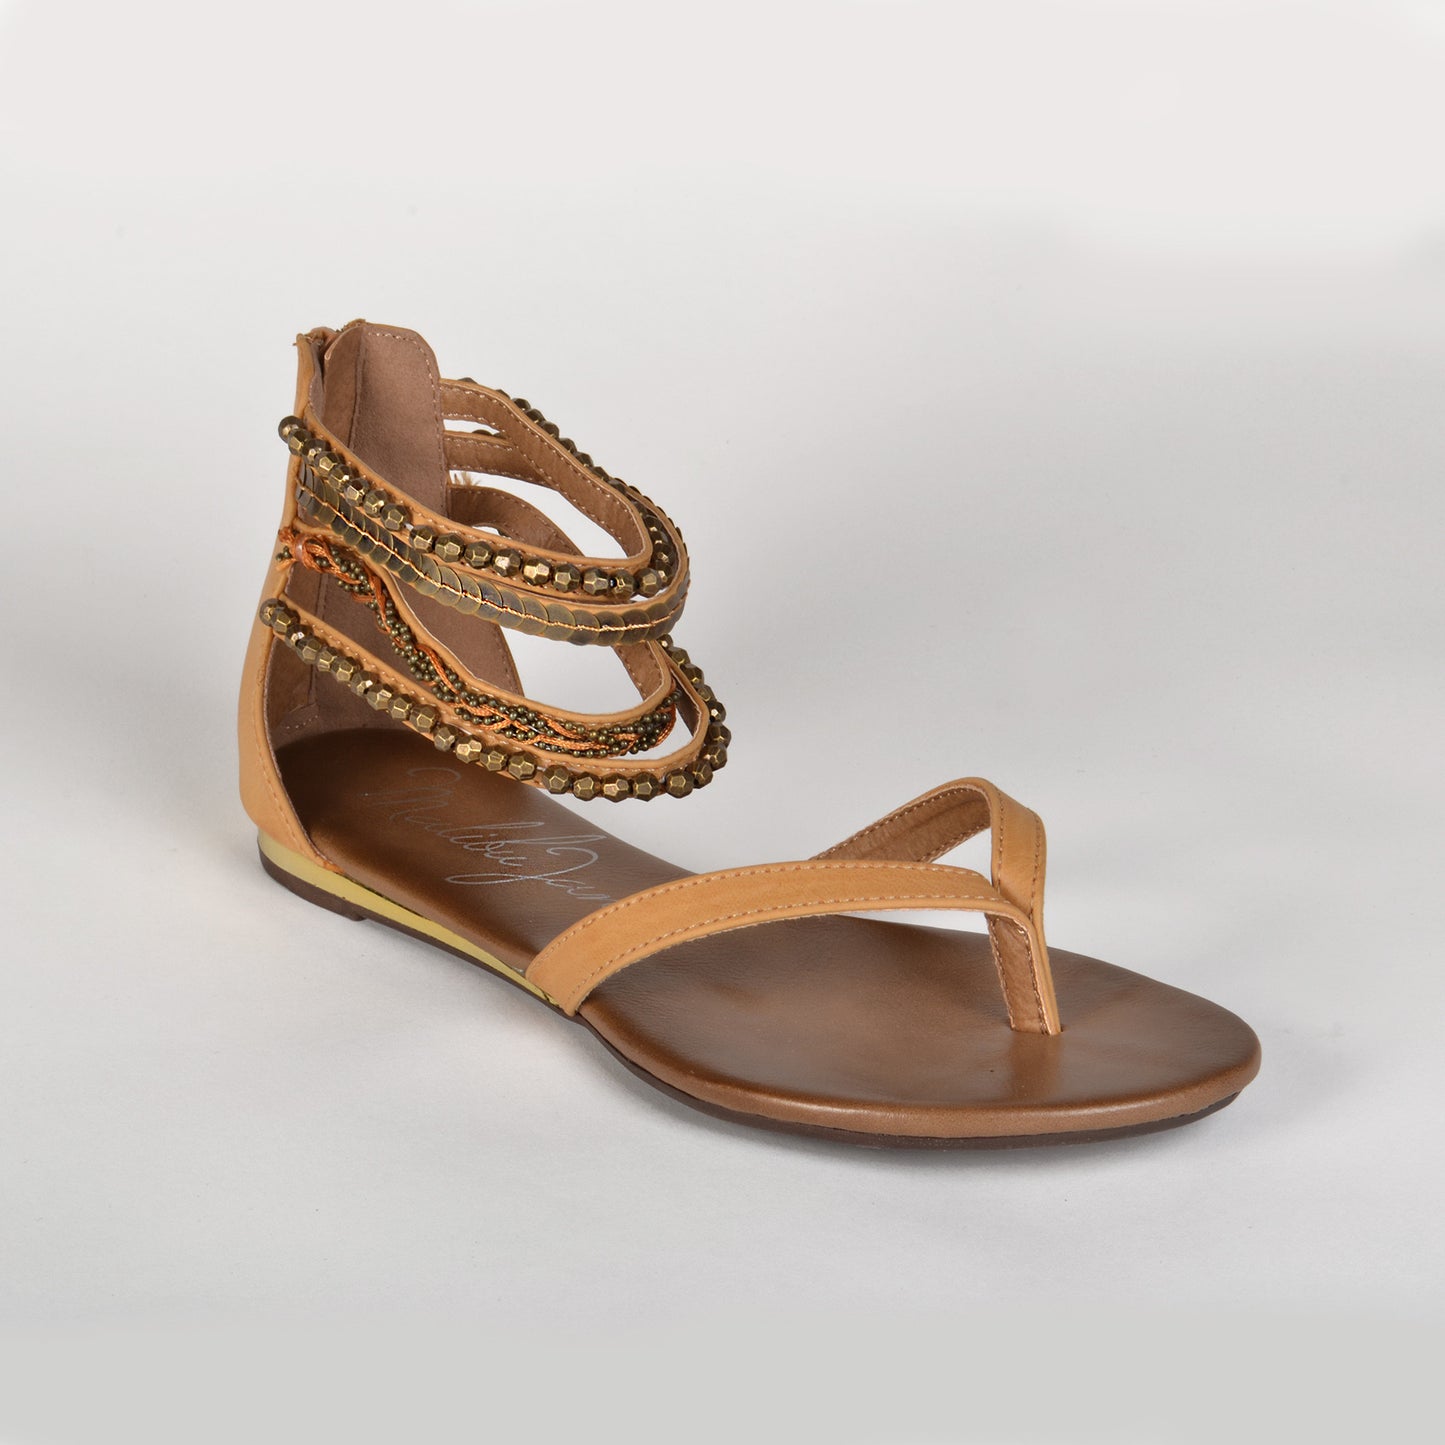 Malibu Jane comfortable vegan leather Laguna embellished ankle strap thong sandal